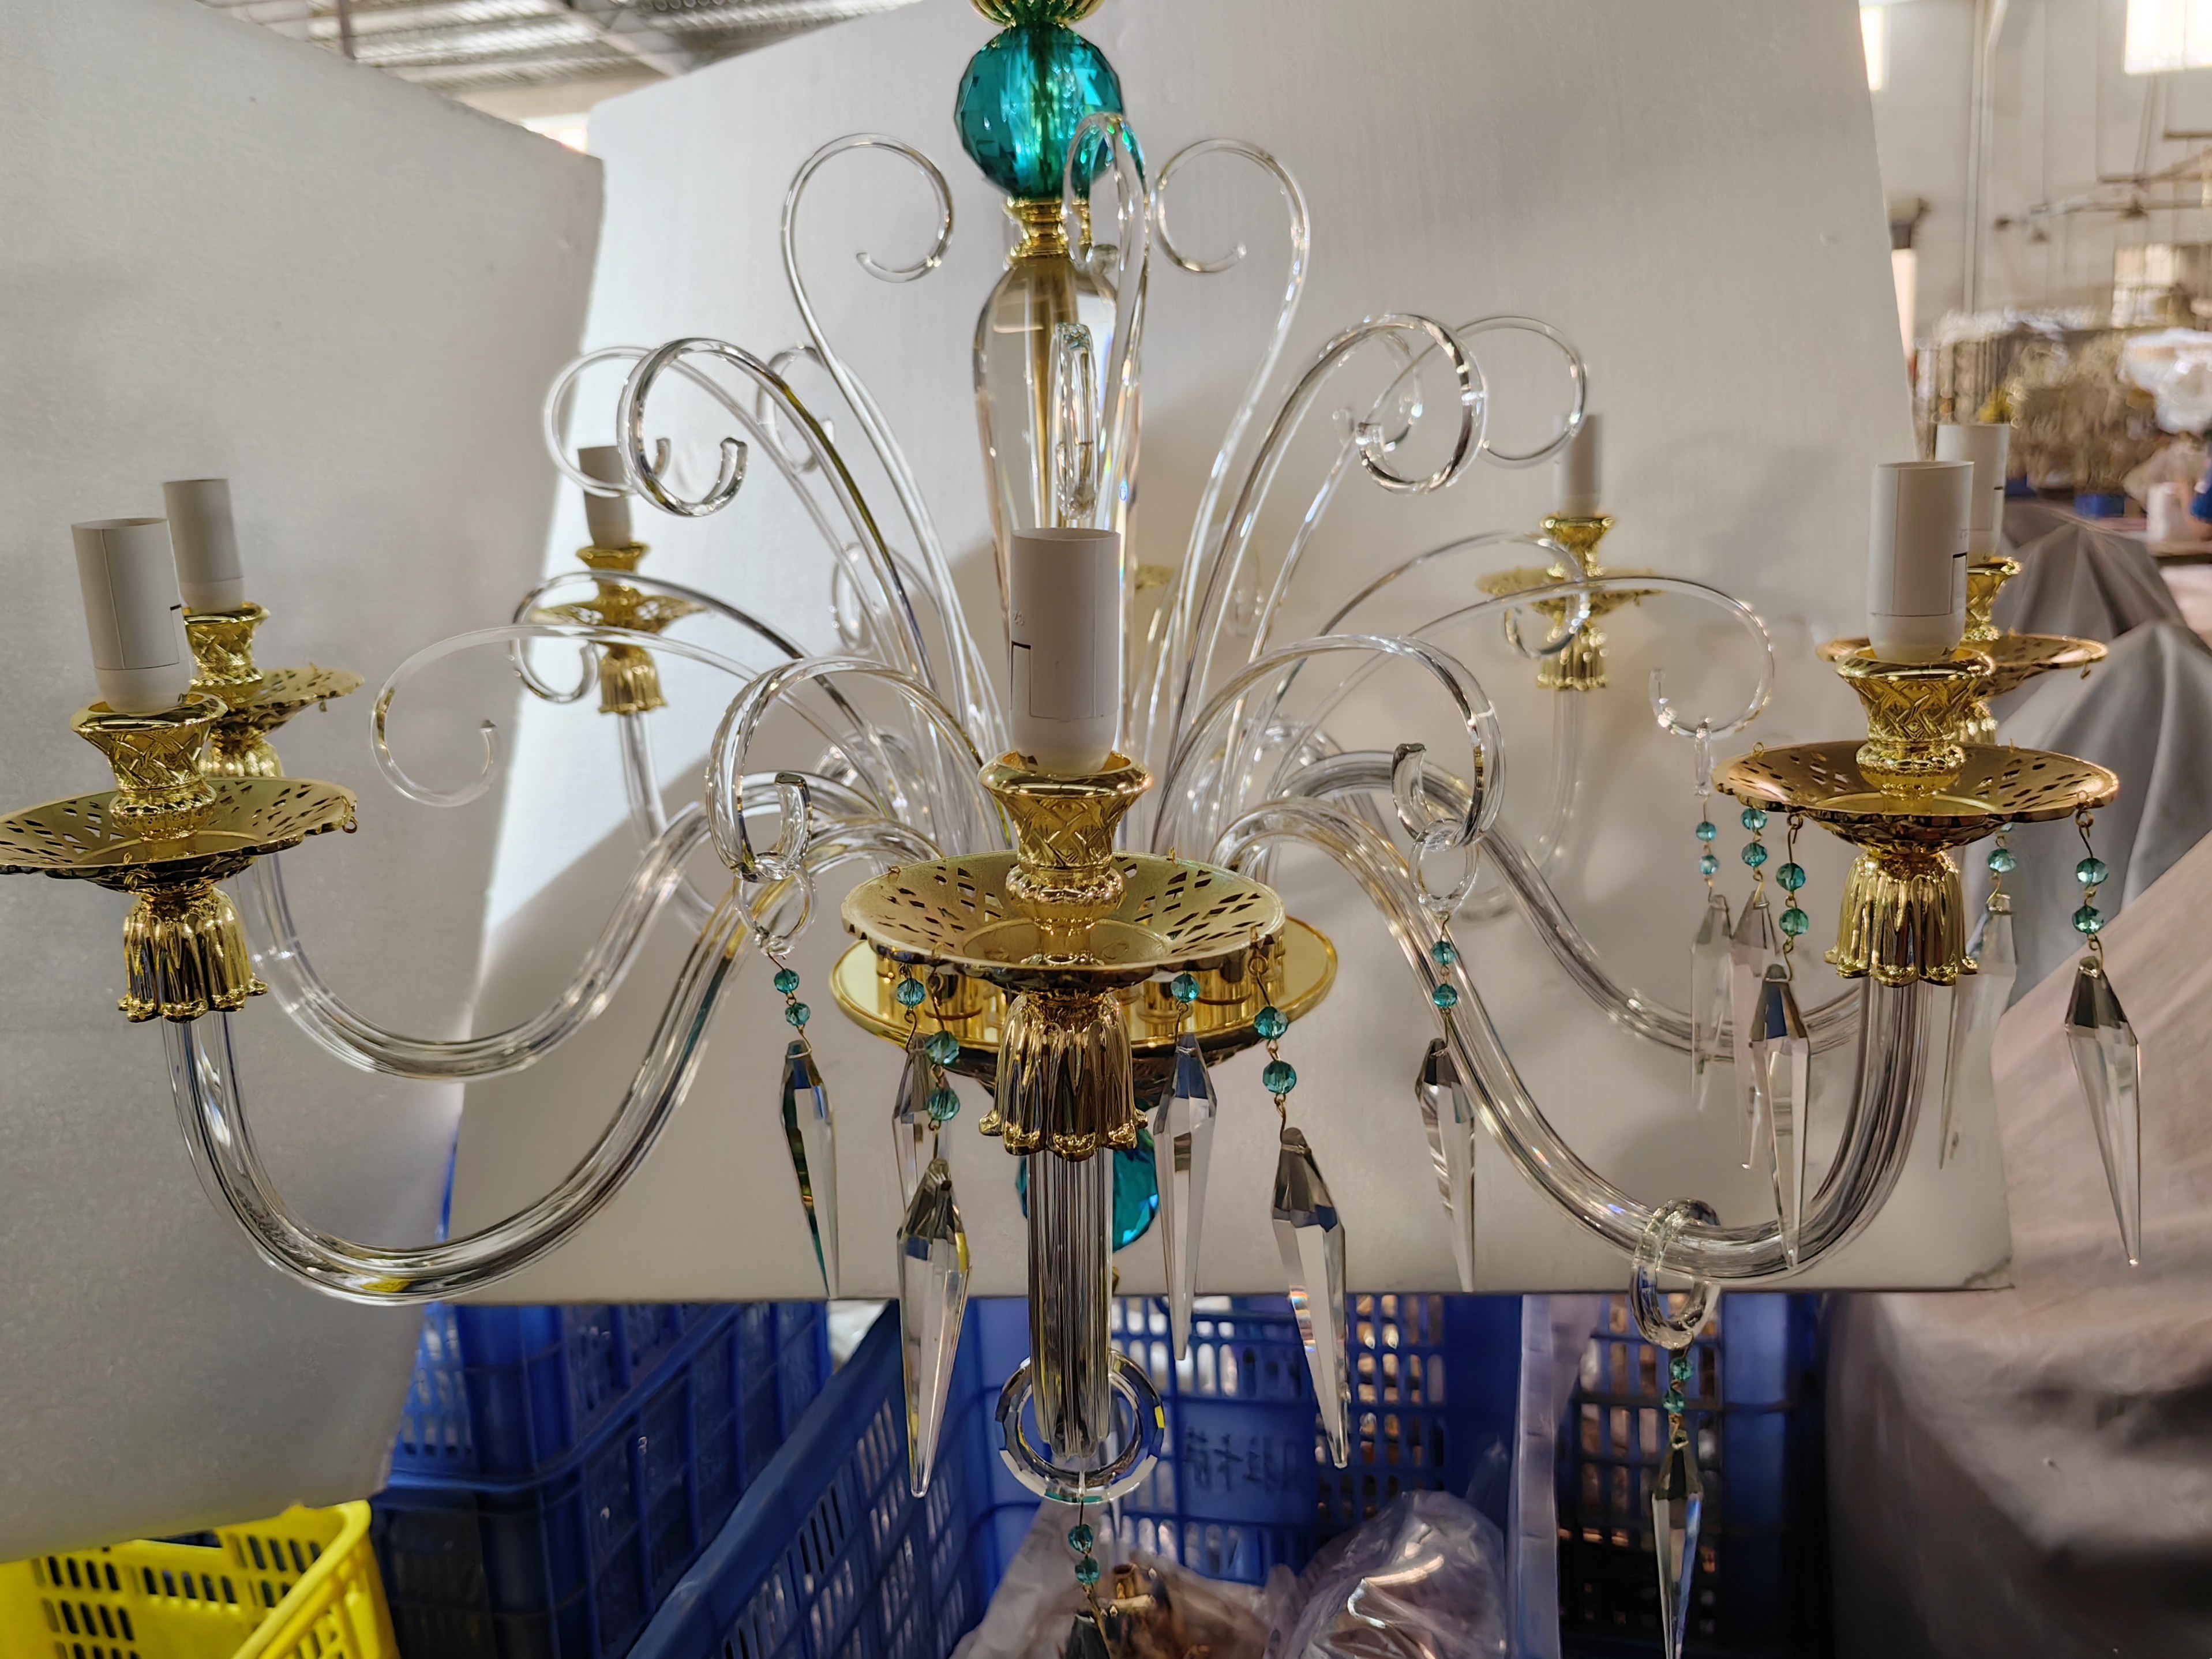 Transitional Comtemporary Indoor Decorative Villa Blue Golden Glass Chandelier (MD66010-8)